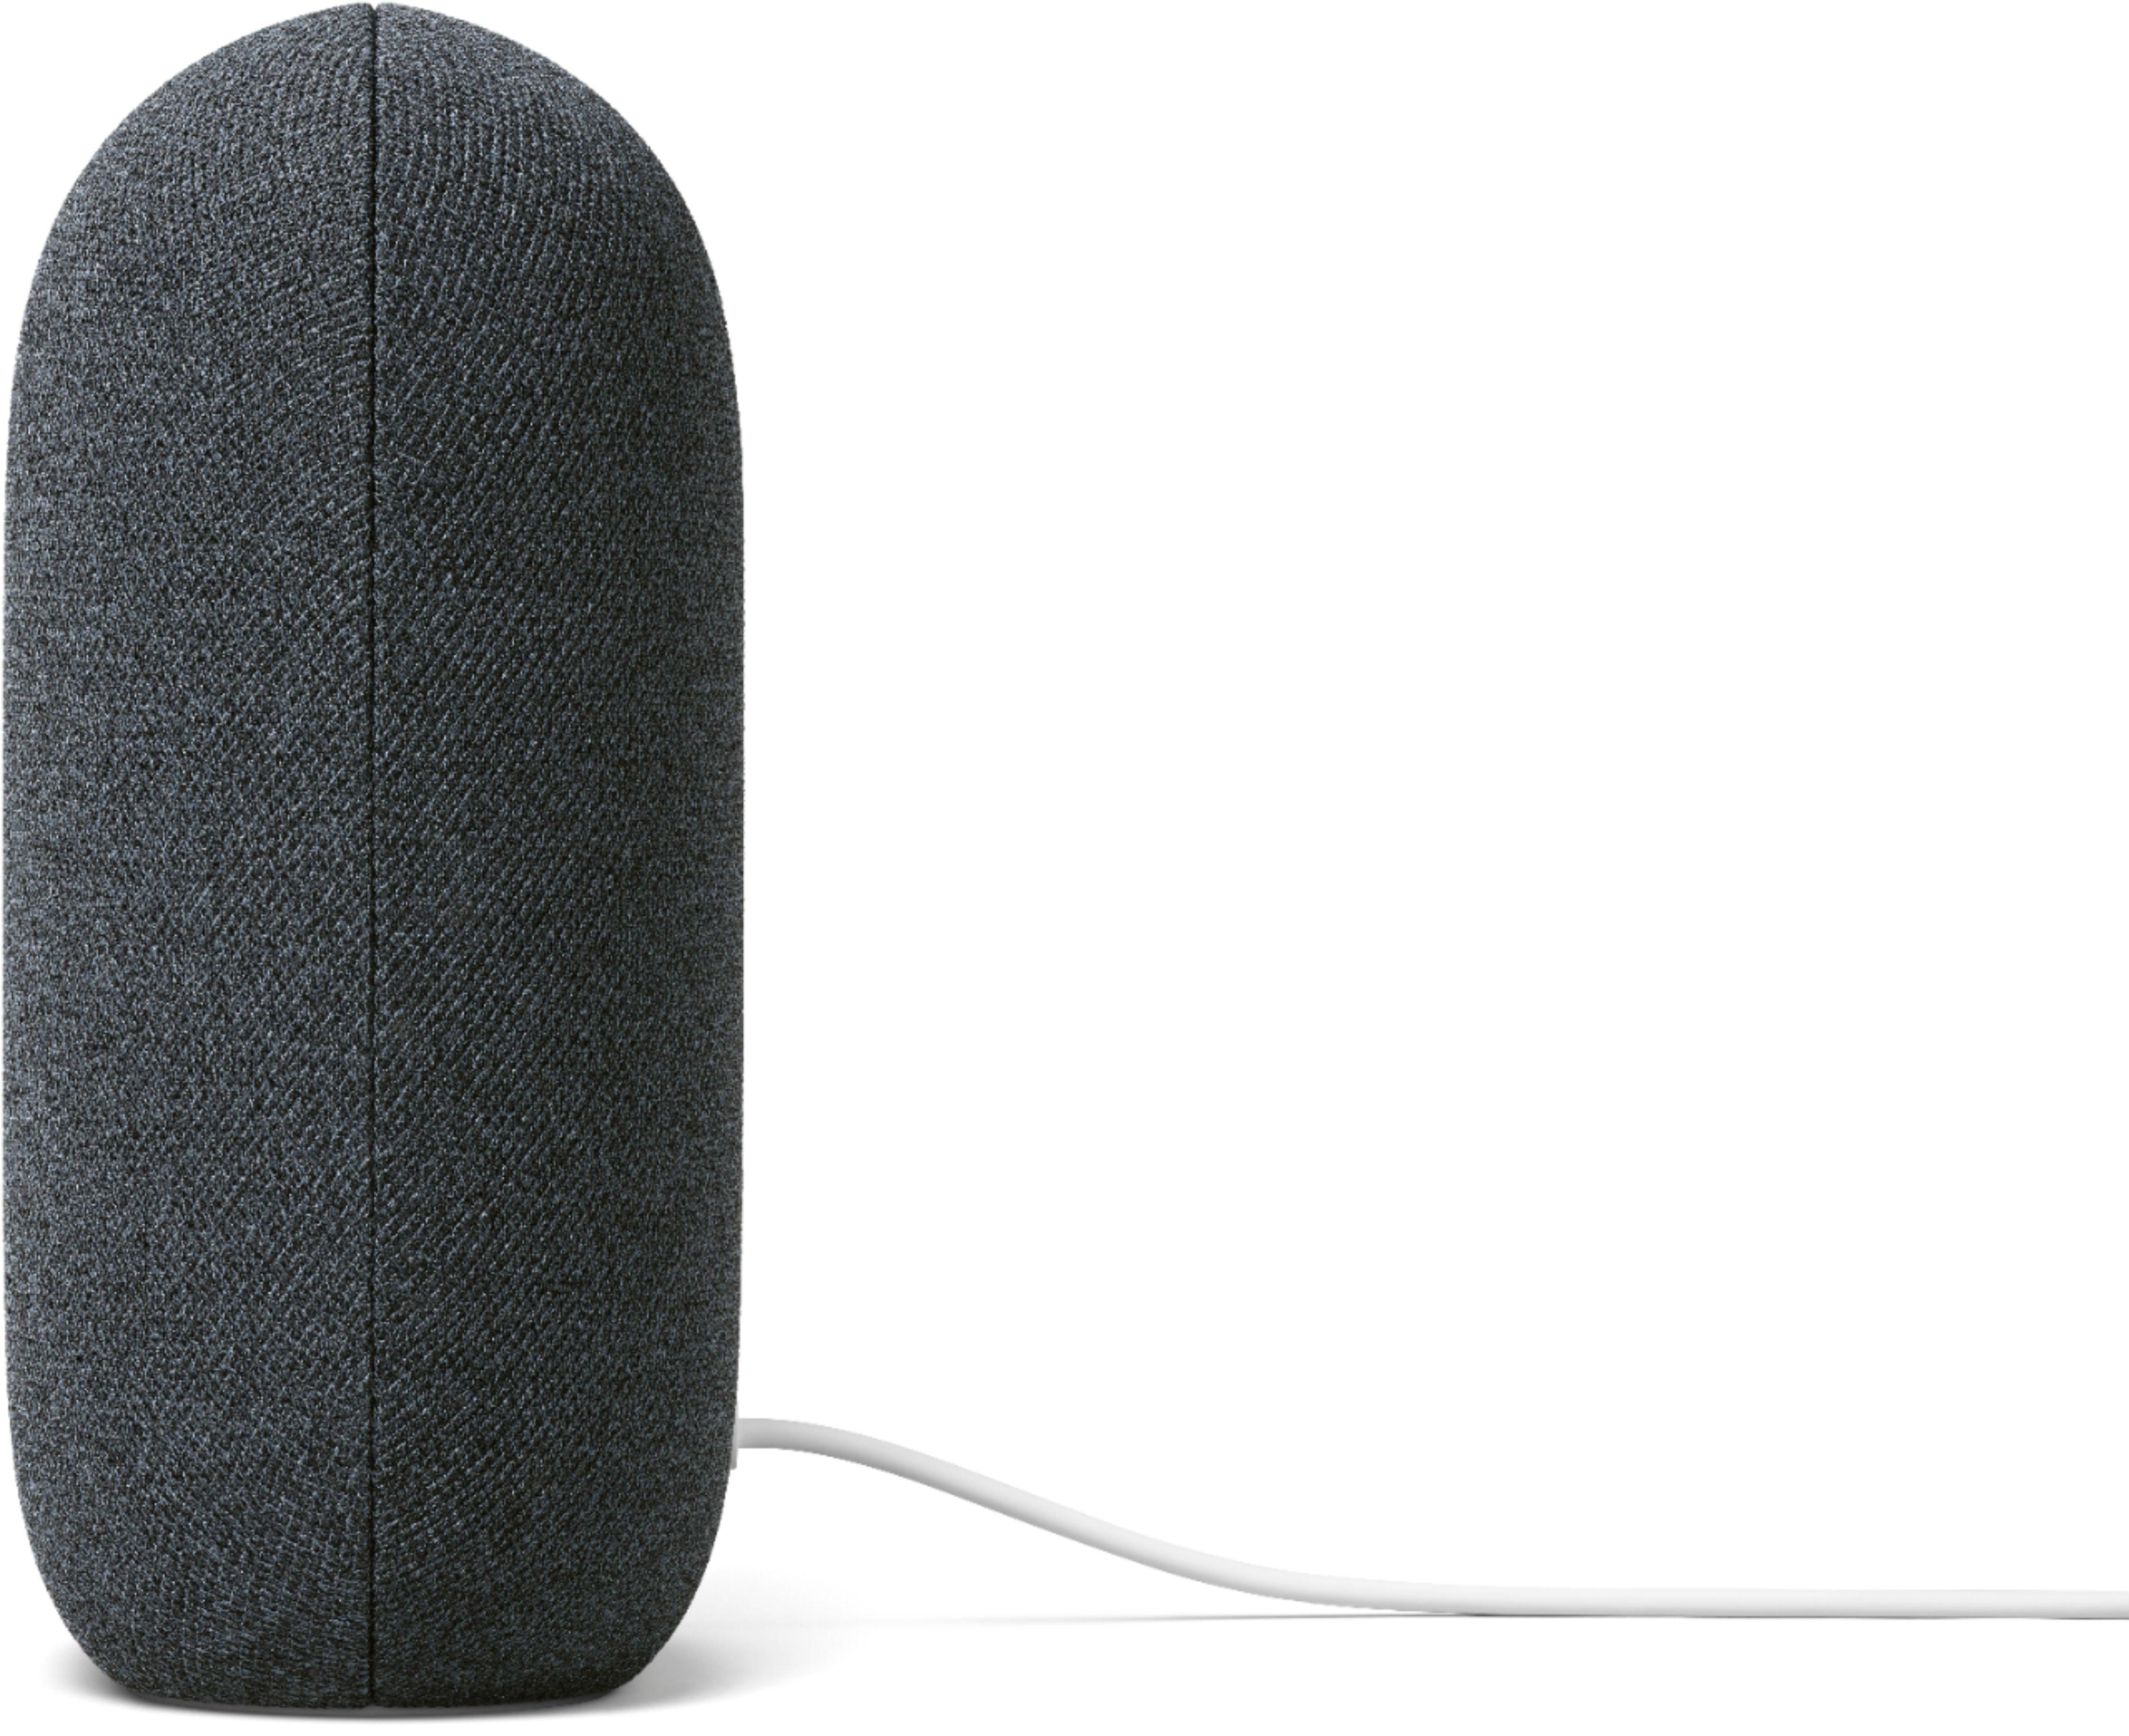 list item 5 of 8 Google Nest Audio Smart Speaker